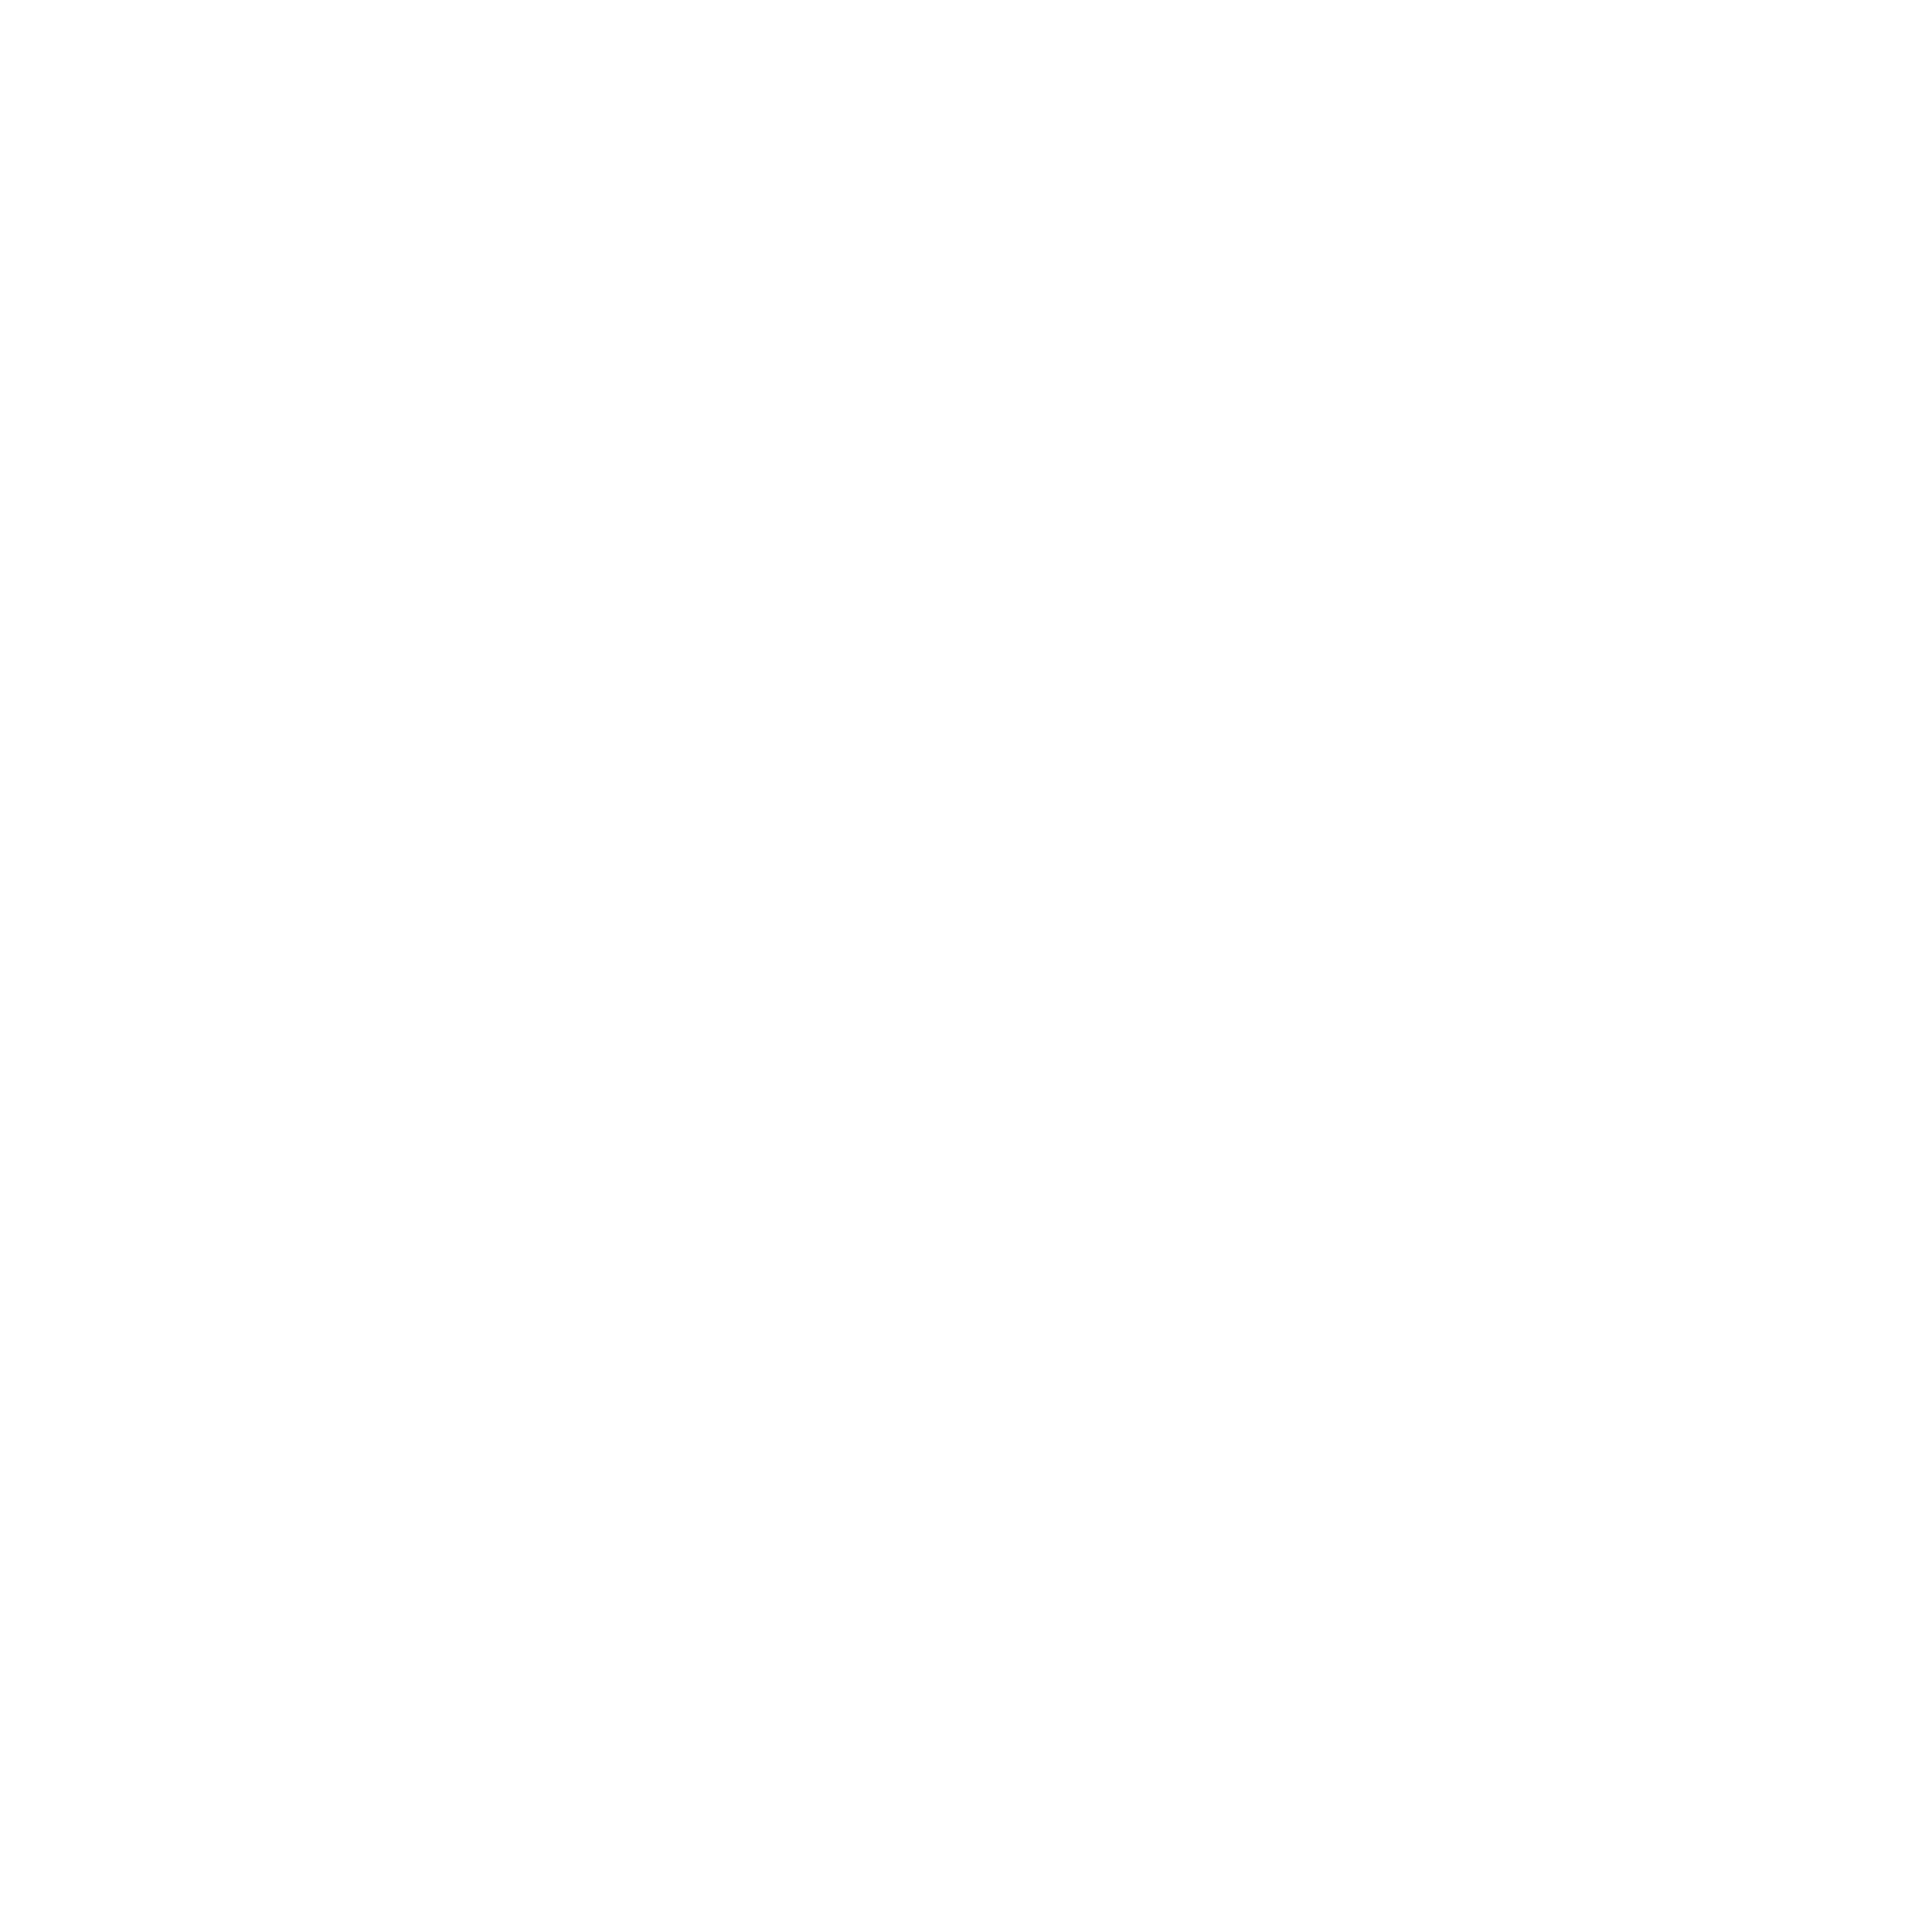 DripDoctors.png